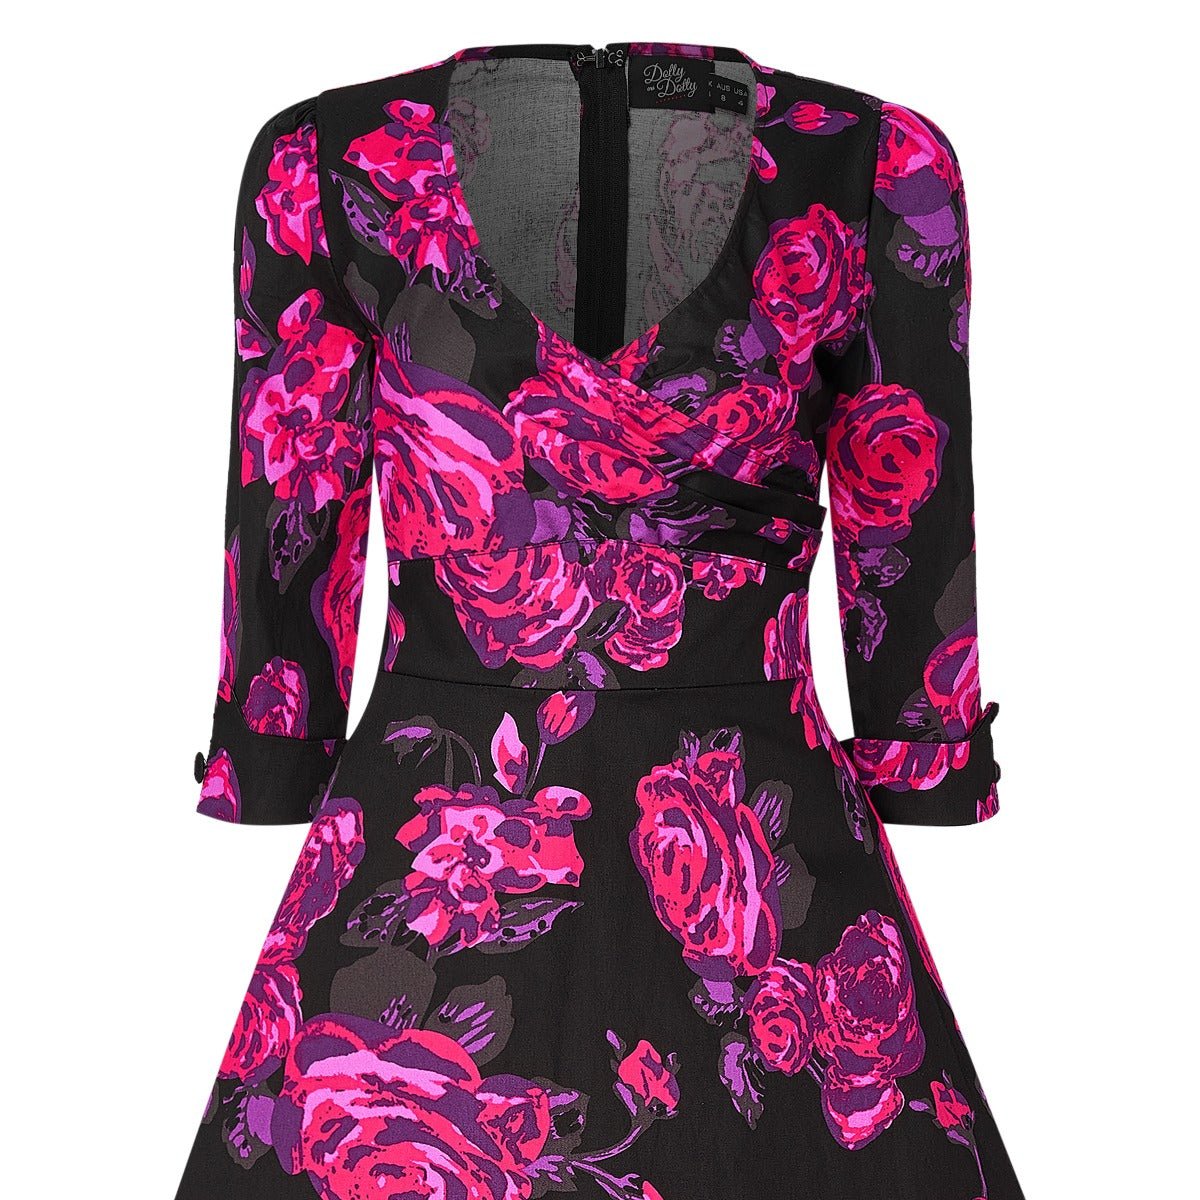 V neck sleeved dress in black and pink floral print close up